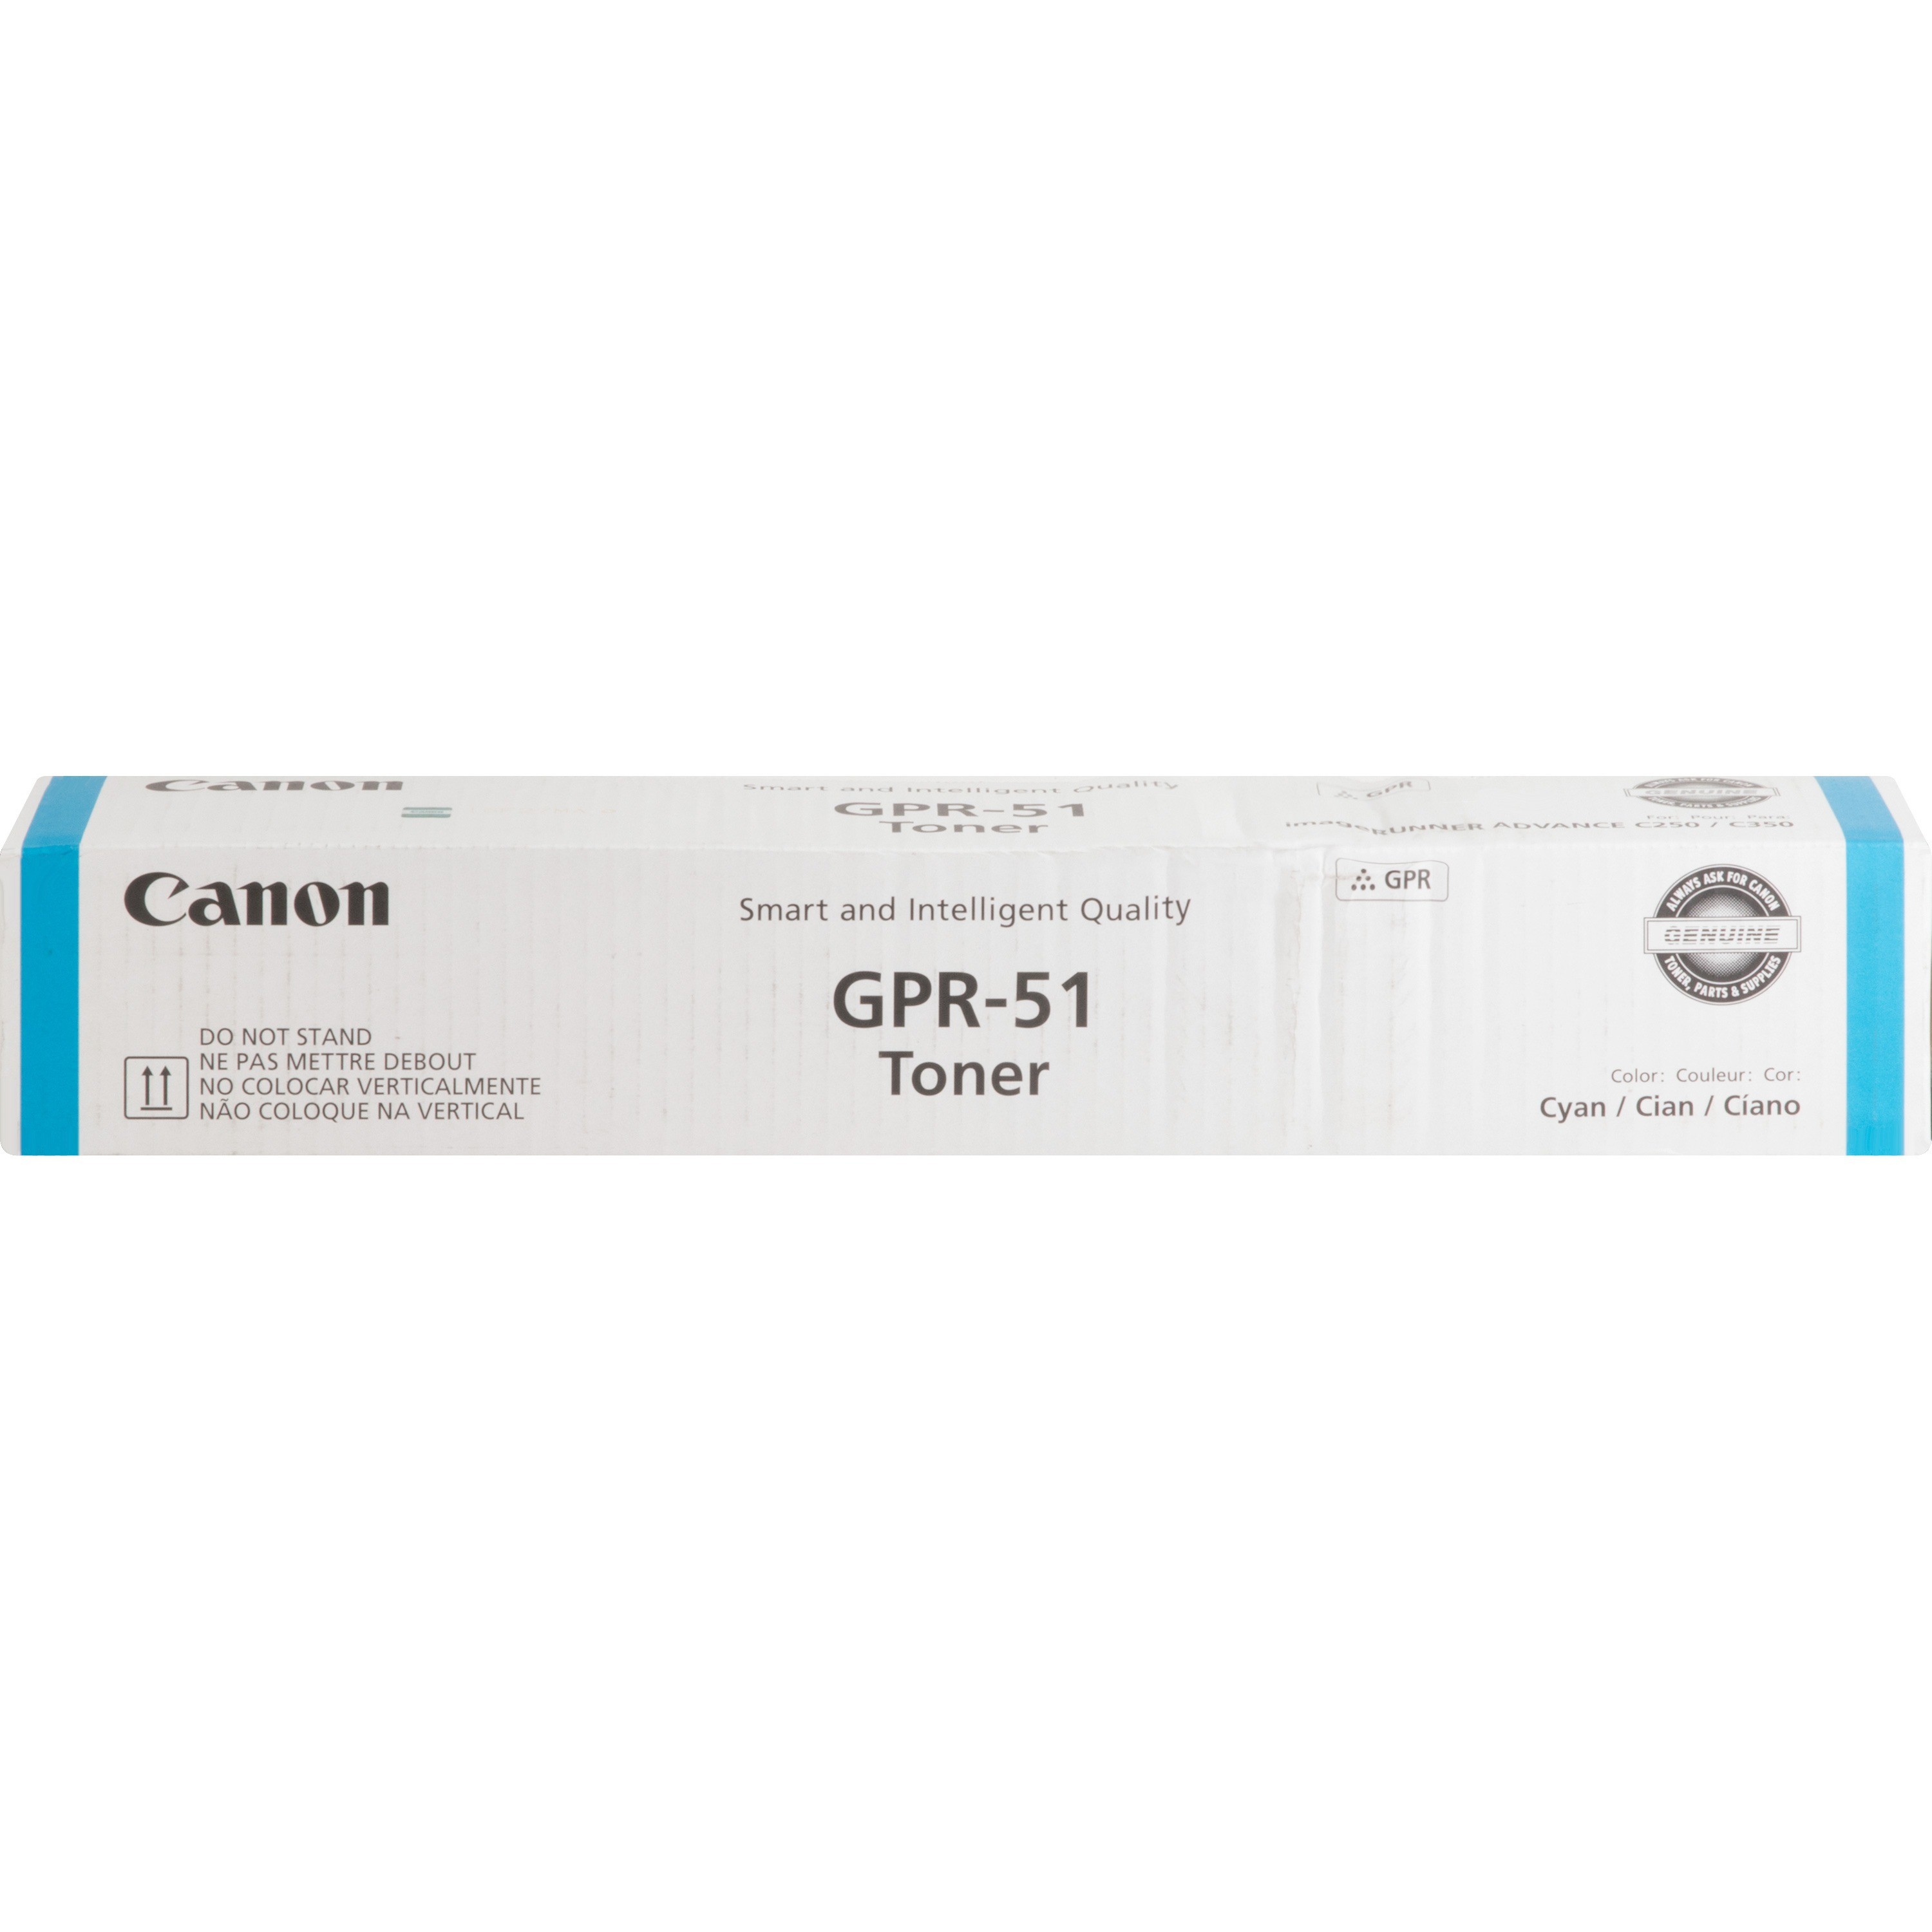 Canon GPR-51 Original Toner Cartridge - Cyan